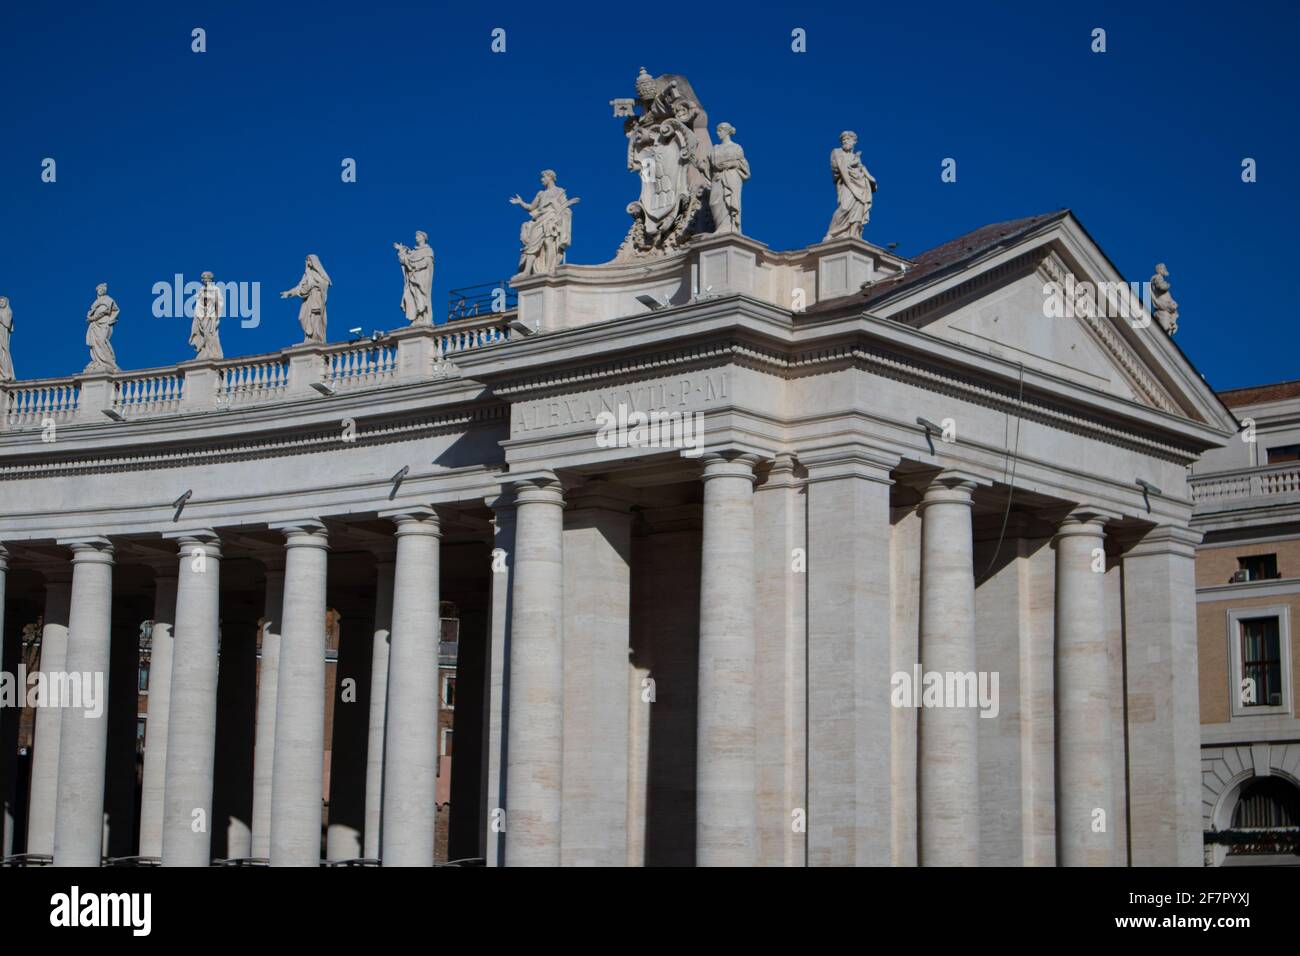 Views of columnata de Bernini buildings. Vatican City, Italy Stock Photo